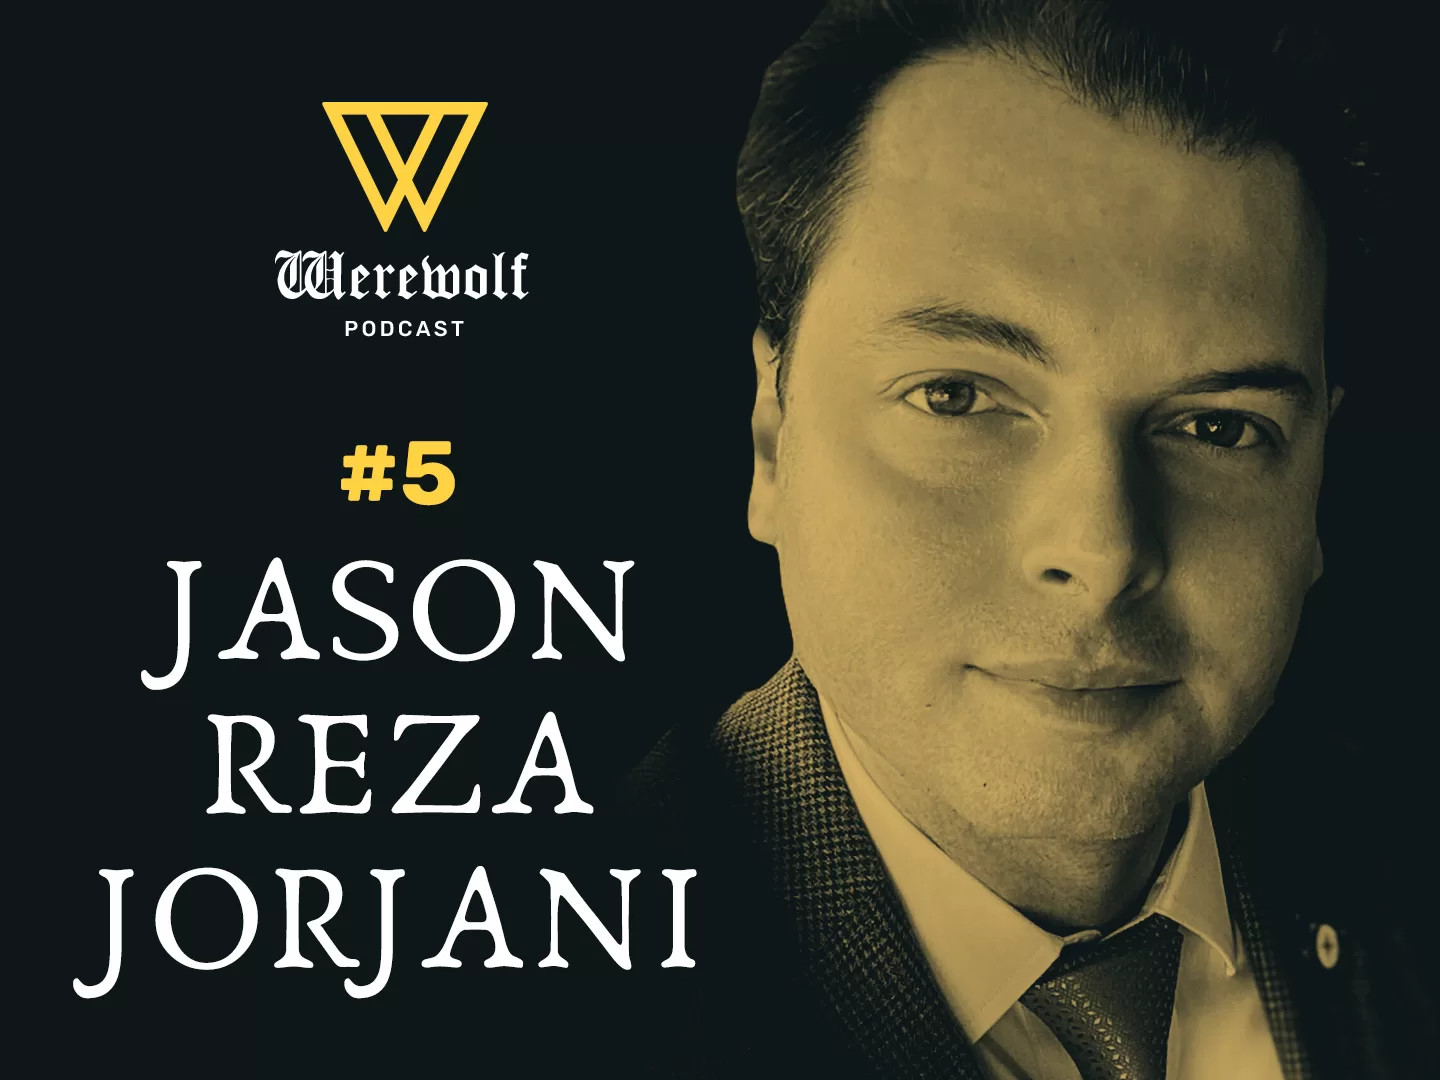 Werewolf Podcast #5: Jason Reza Jorjani